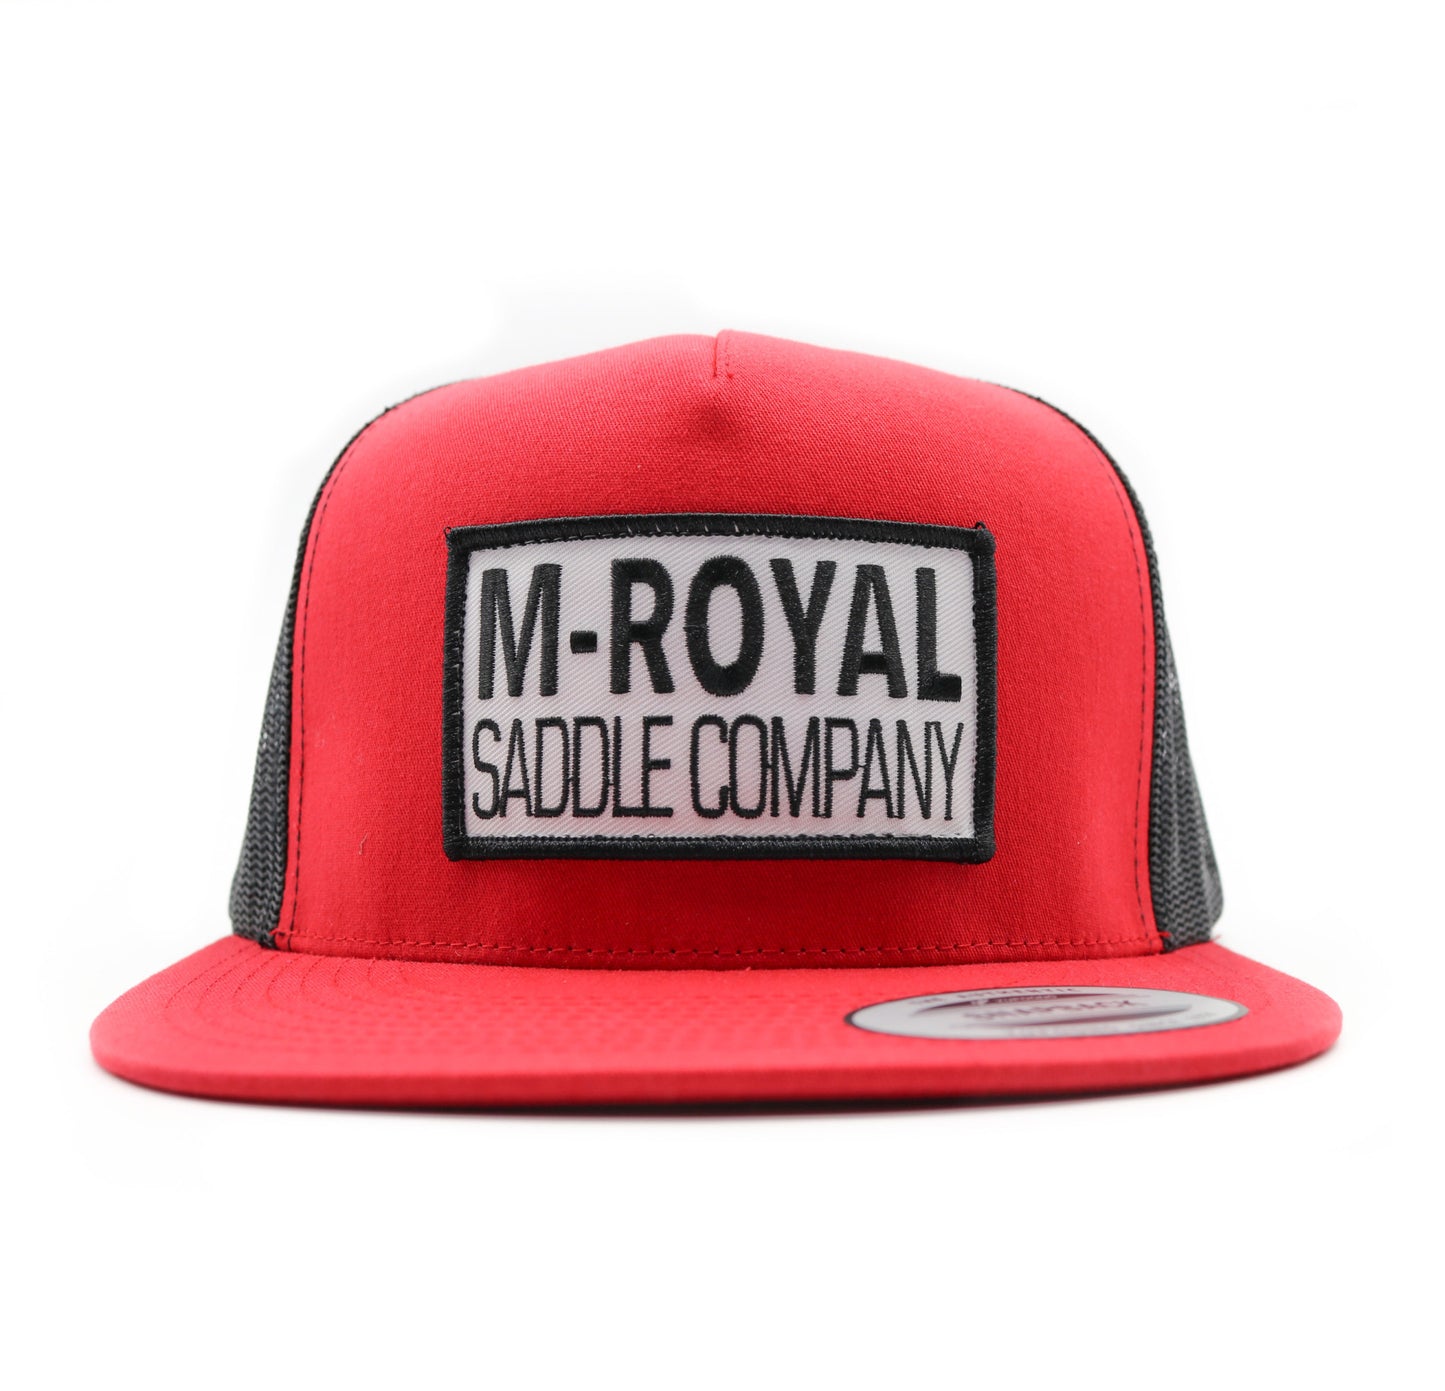 M-Royal Saddle Company Red Hat Cachucha